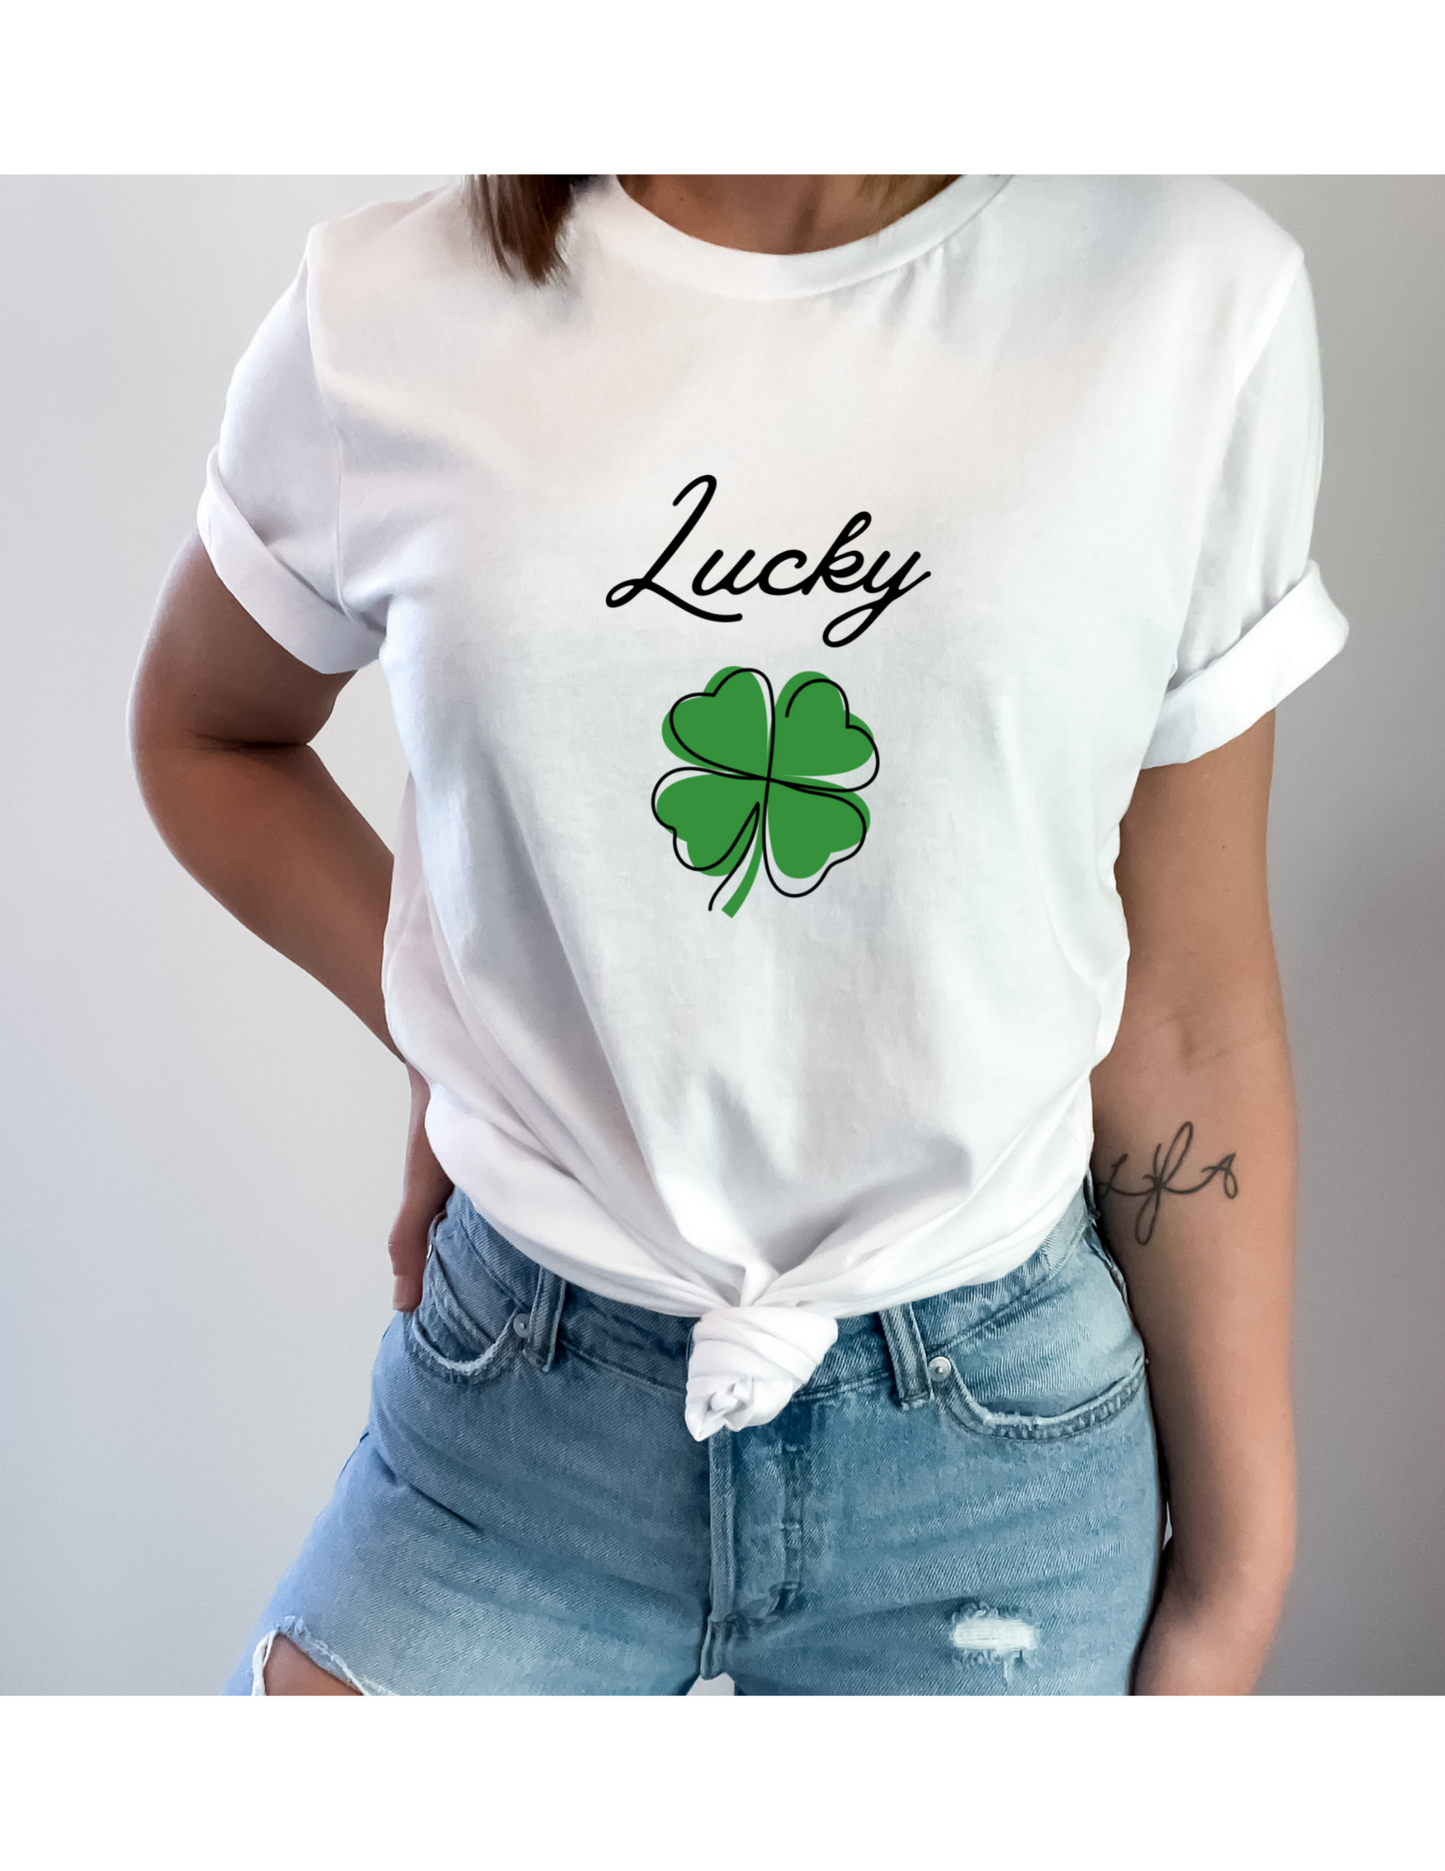 Lucky Tshirt, Shamrock Shirt